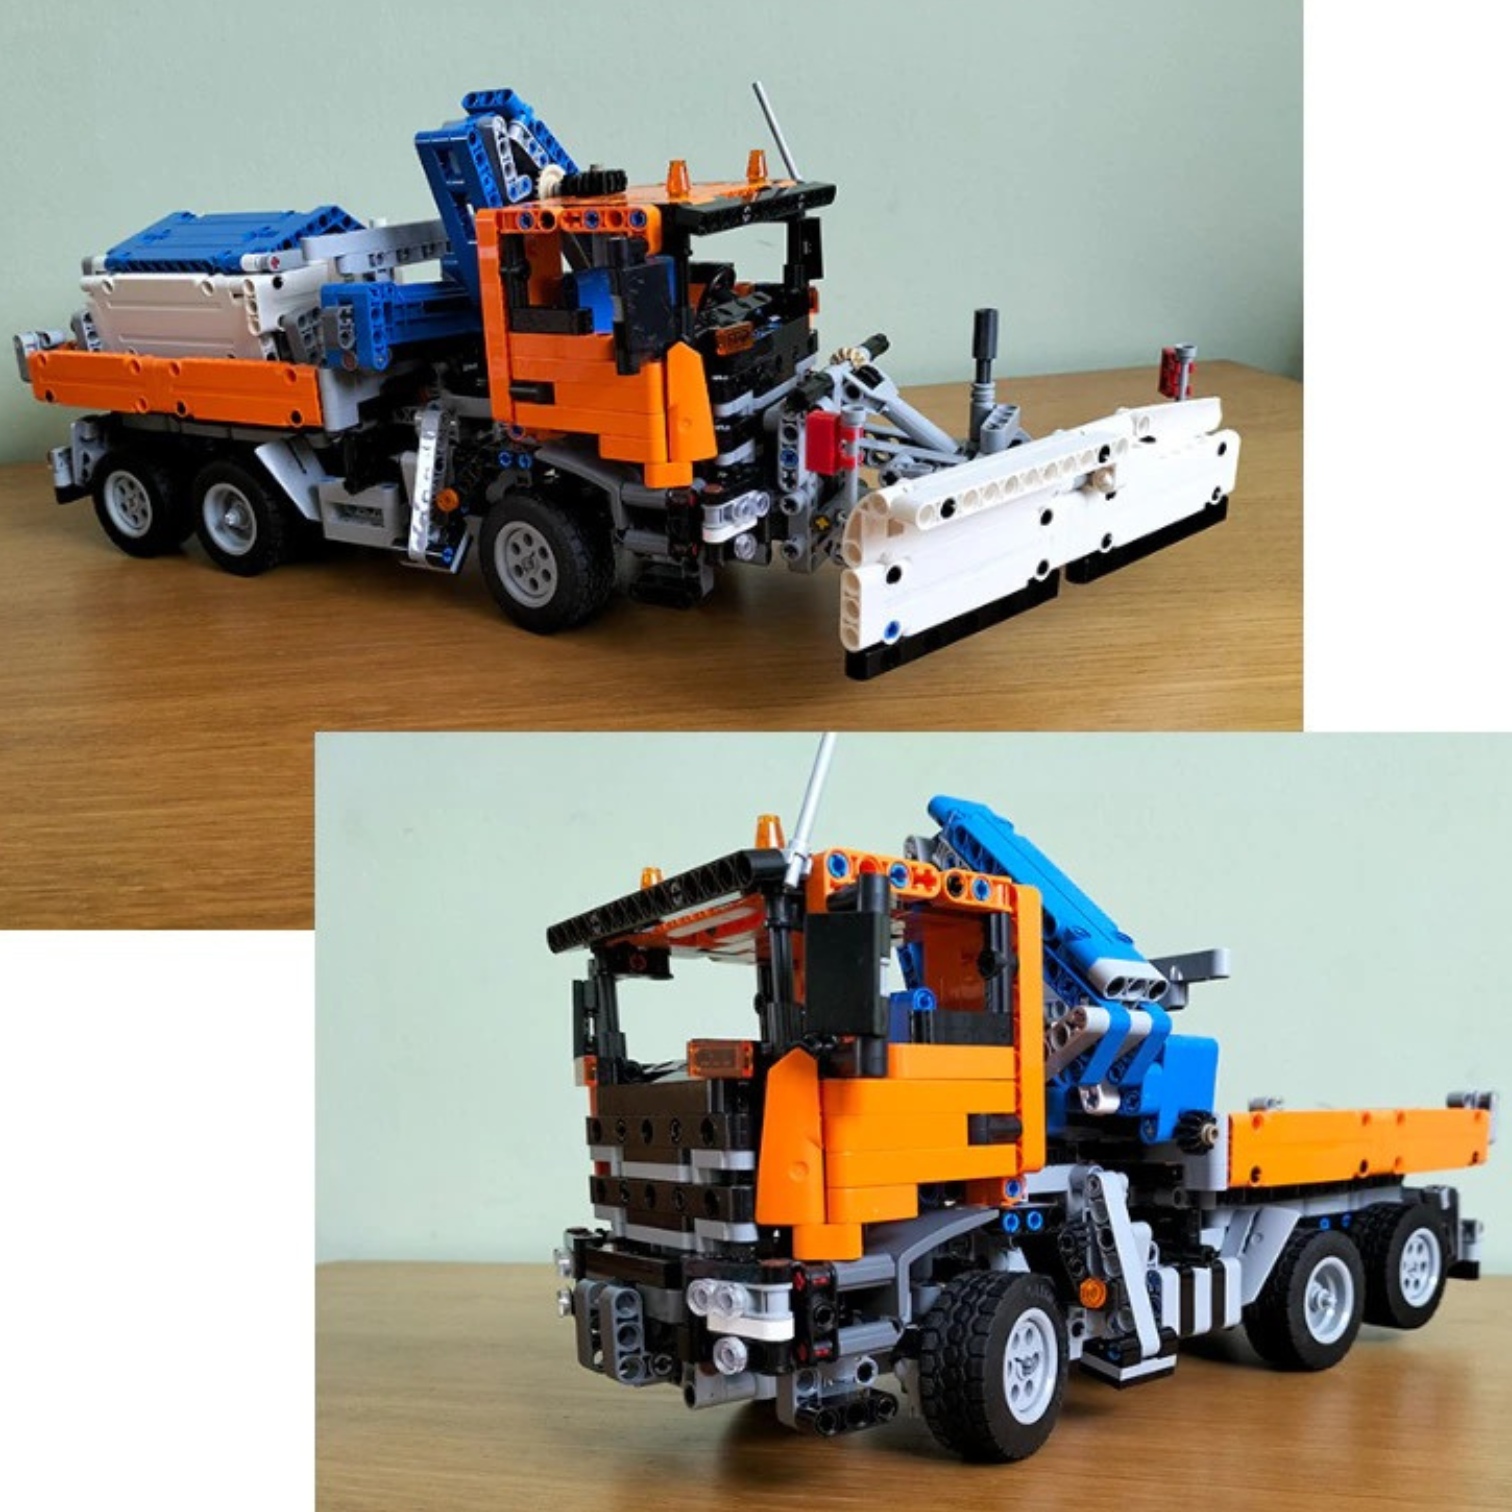 XT Snowplot Transport Dump Truck MOC-97475 Technic With 1395 Pieces